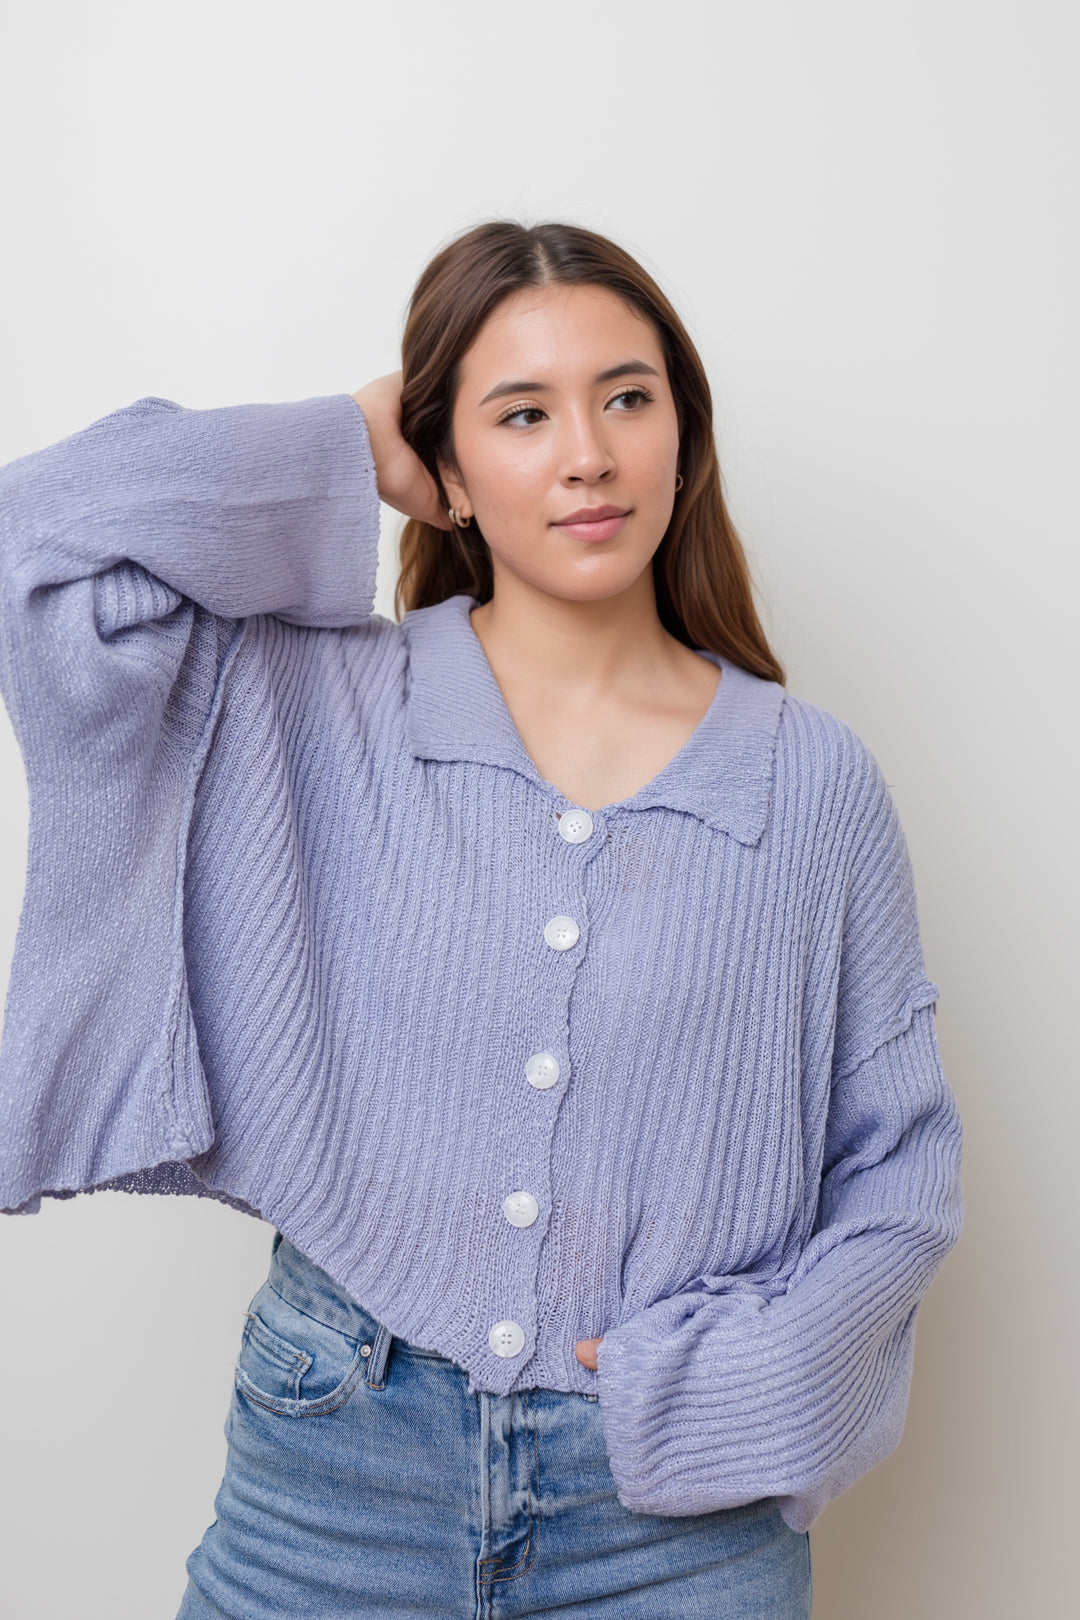 The Sweet Carolina Blue Cropped Cardigan Sweater